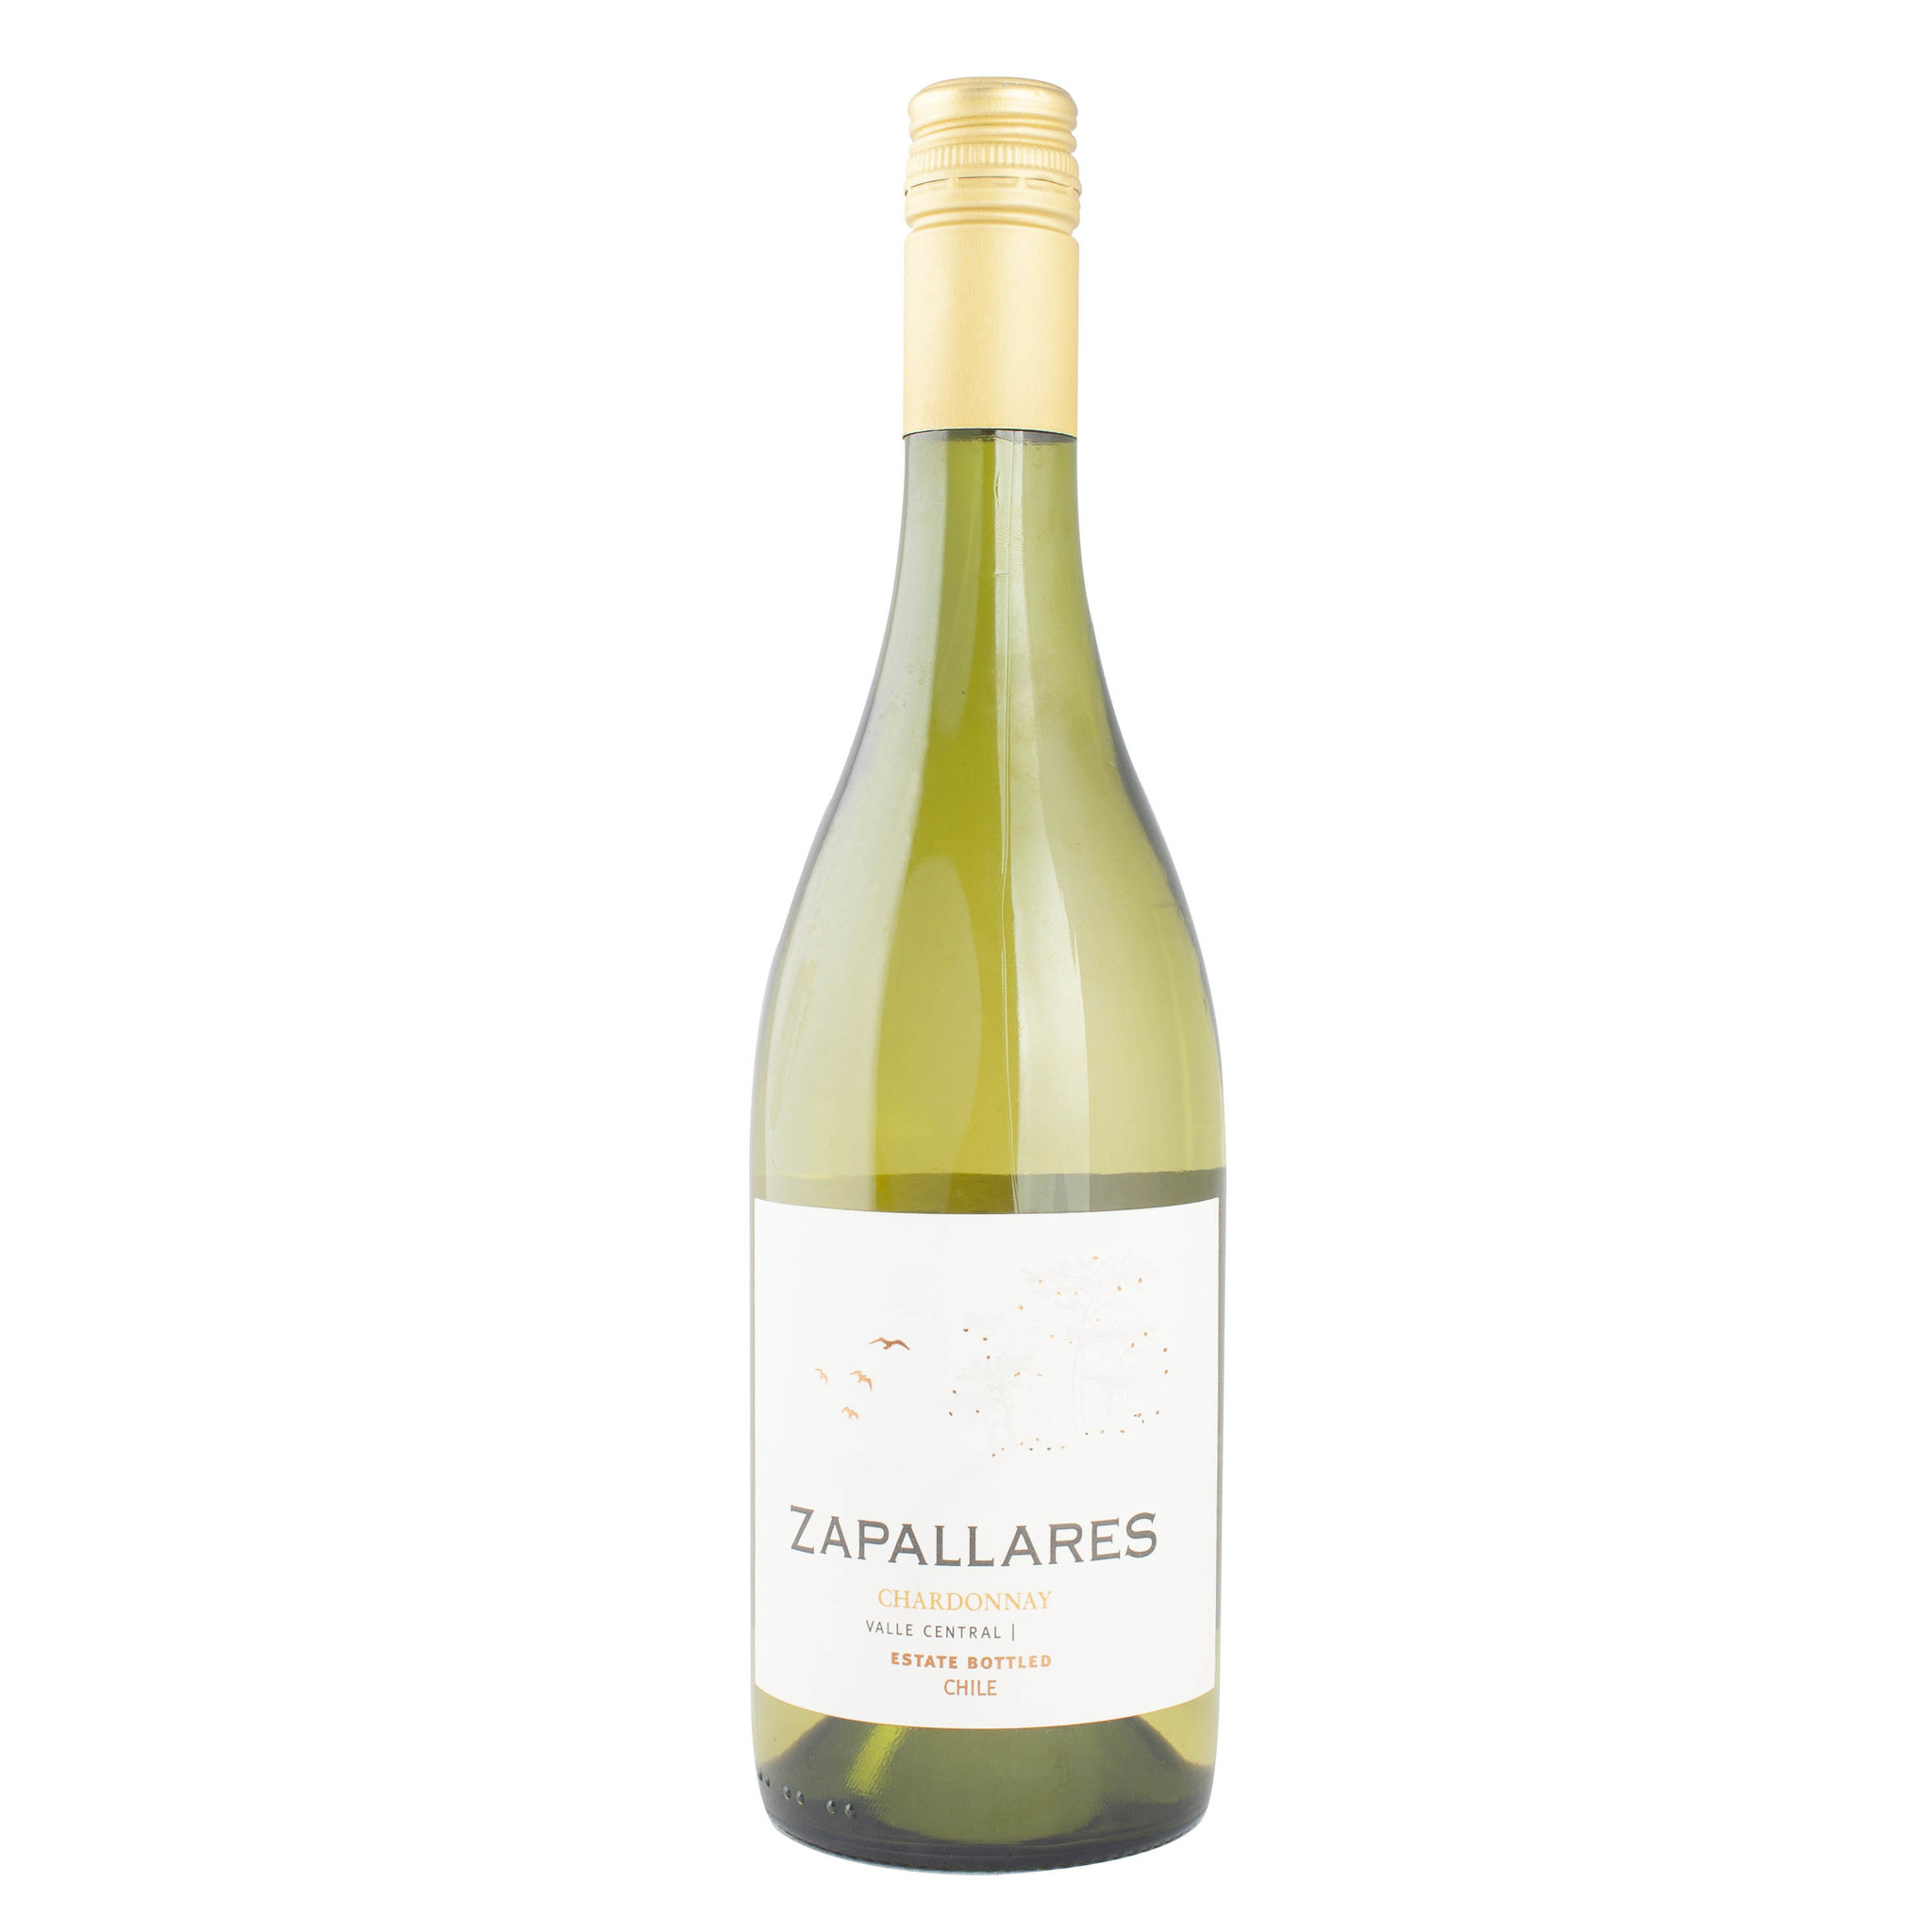 Zapallares Chardonnay 2018